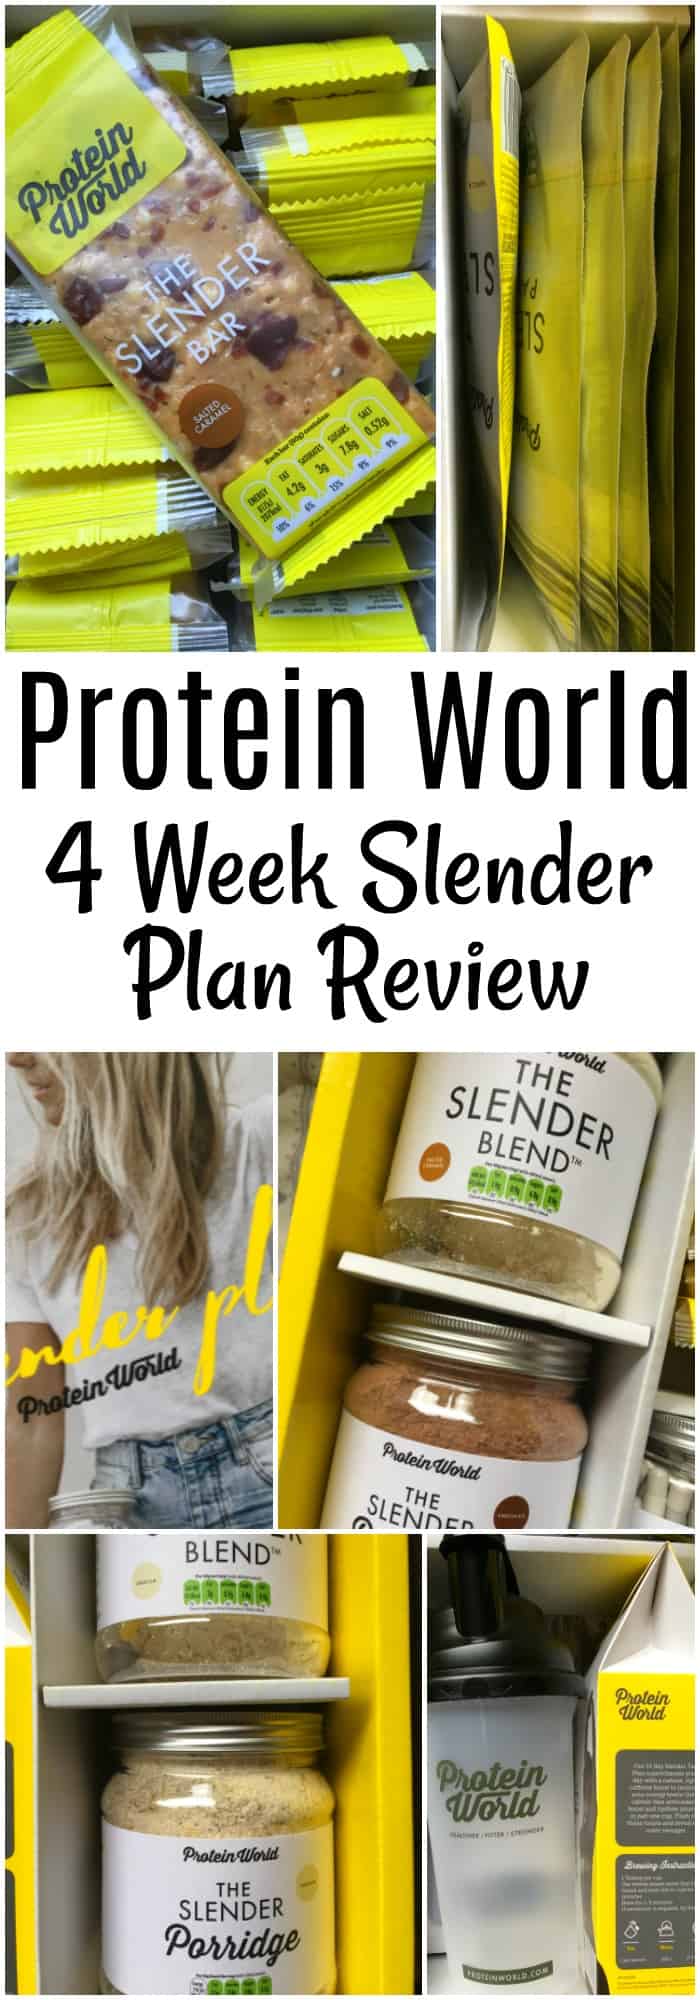 Protein World 4 Week Slender Plan Review